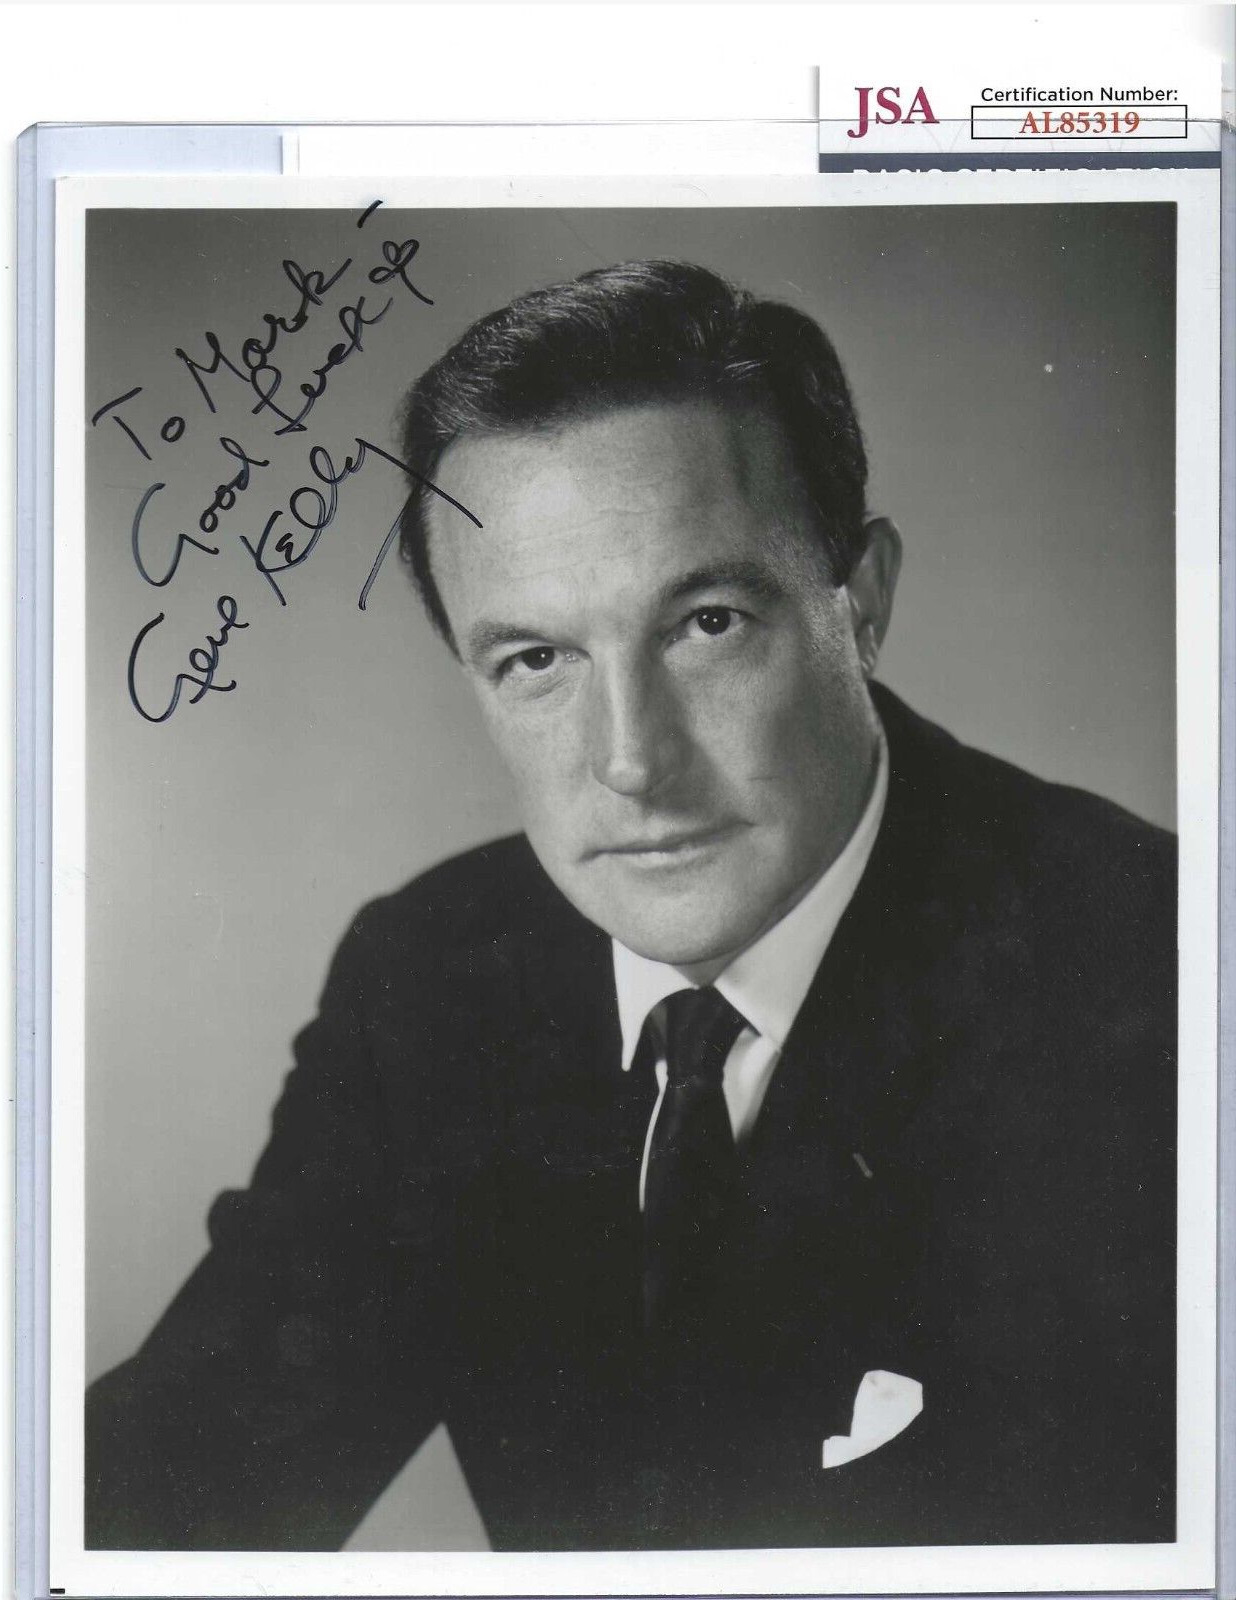 Gene Kelly Autographed 8x10 B&W Photo JSA COA Hollywood Actor Singer